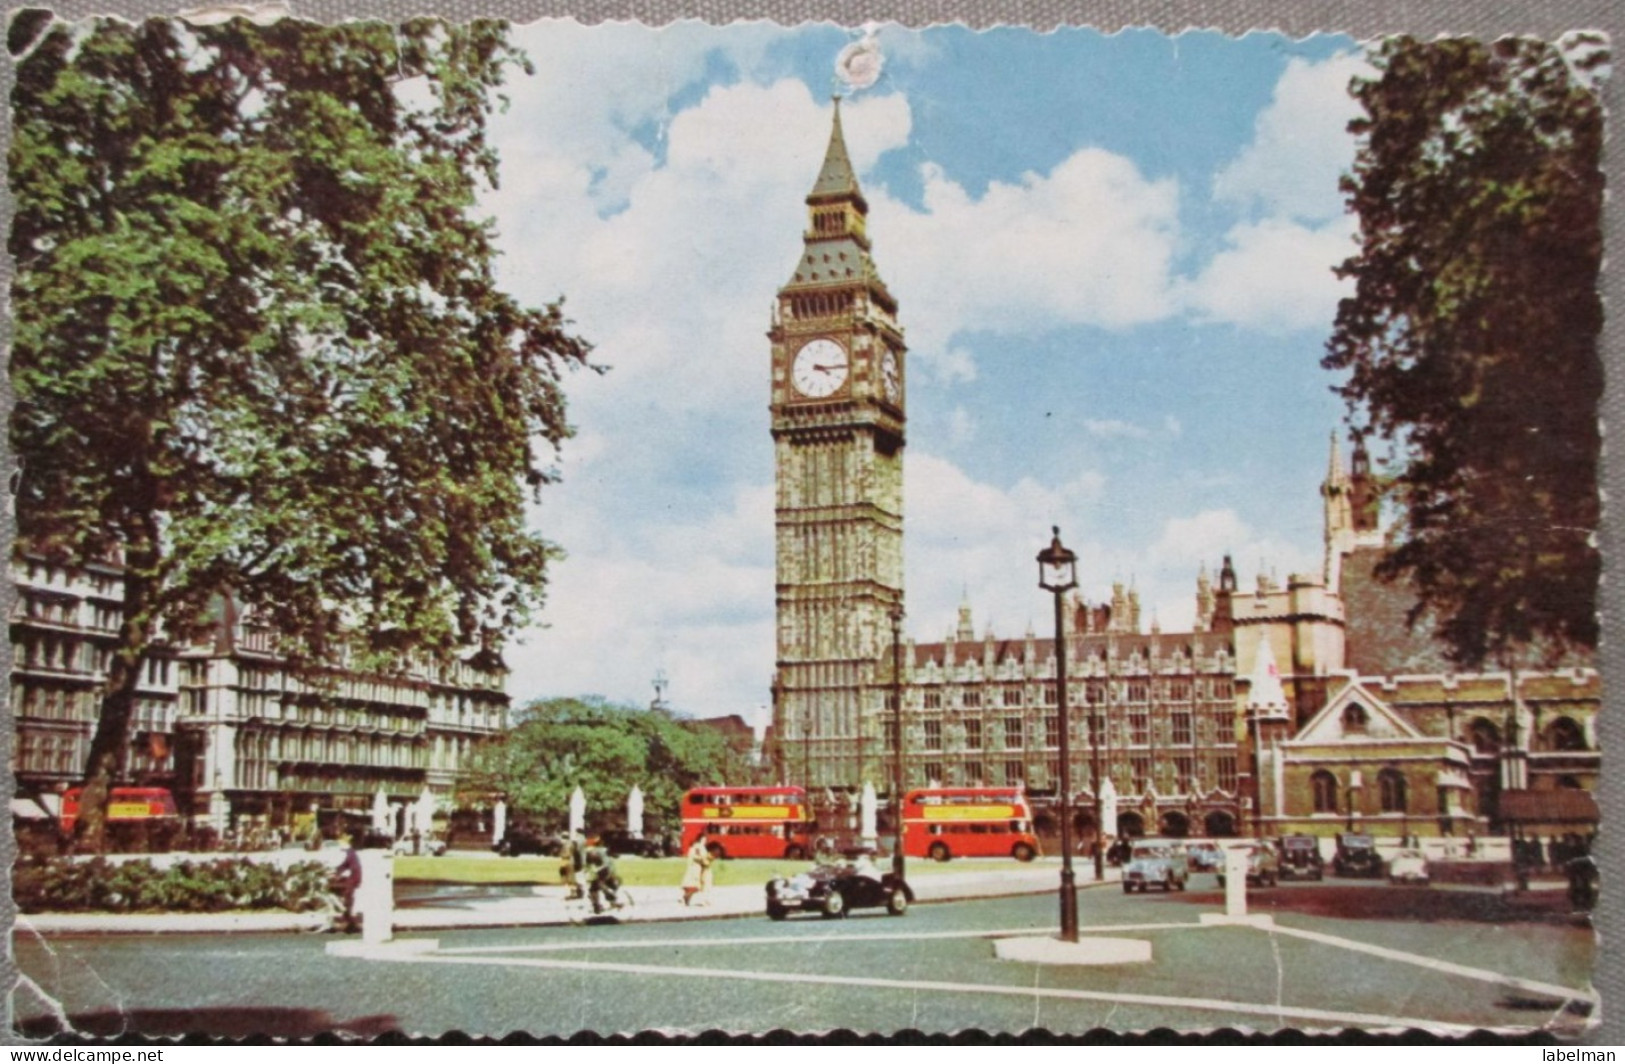 ENGLAND UK UNITED KINGDOM LONDON BIG BEN CLOCK TOWER KARTE CARD POSTCARD CARTOLINA CARTE POSTALE ANSICHTSKARTE POSTKARTE - Reading